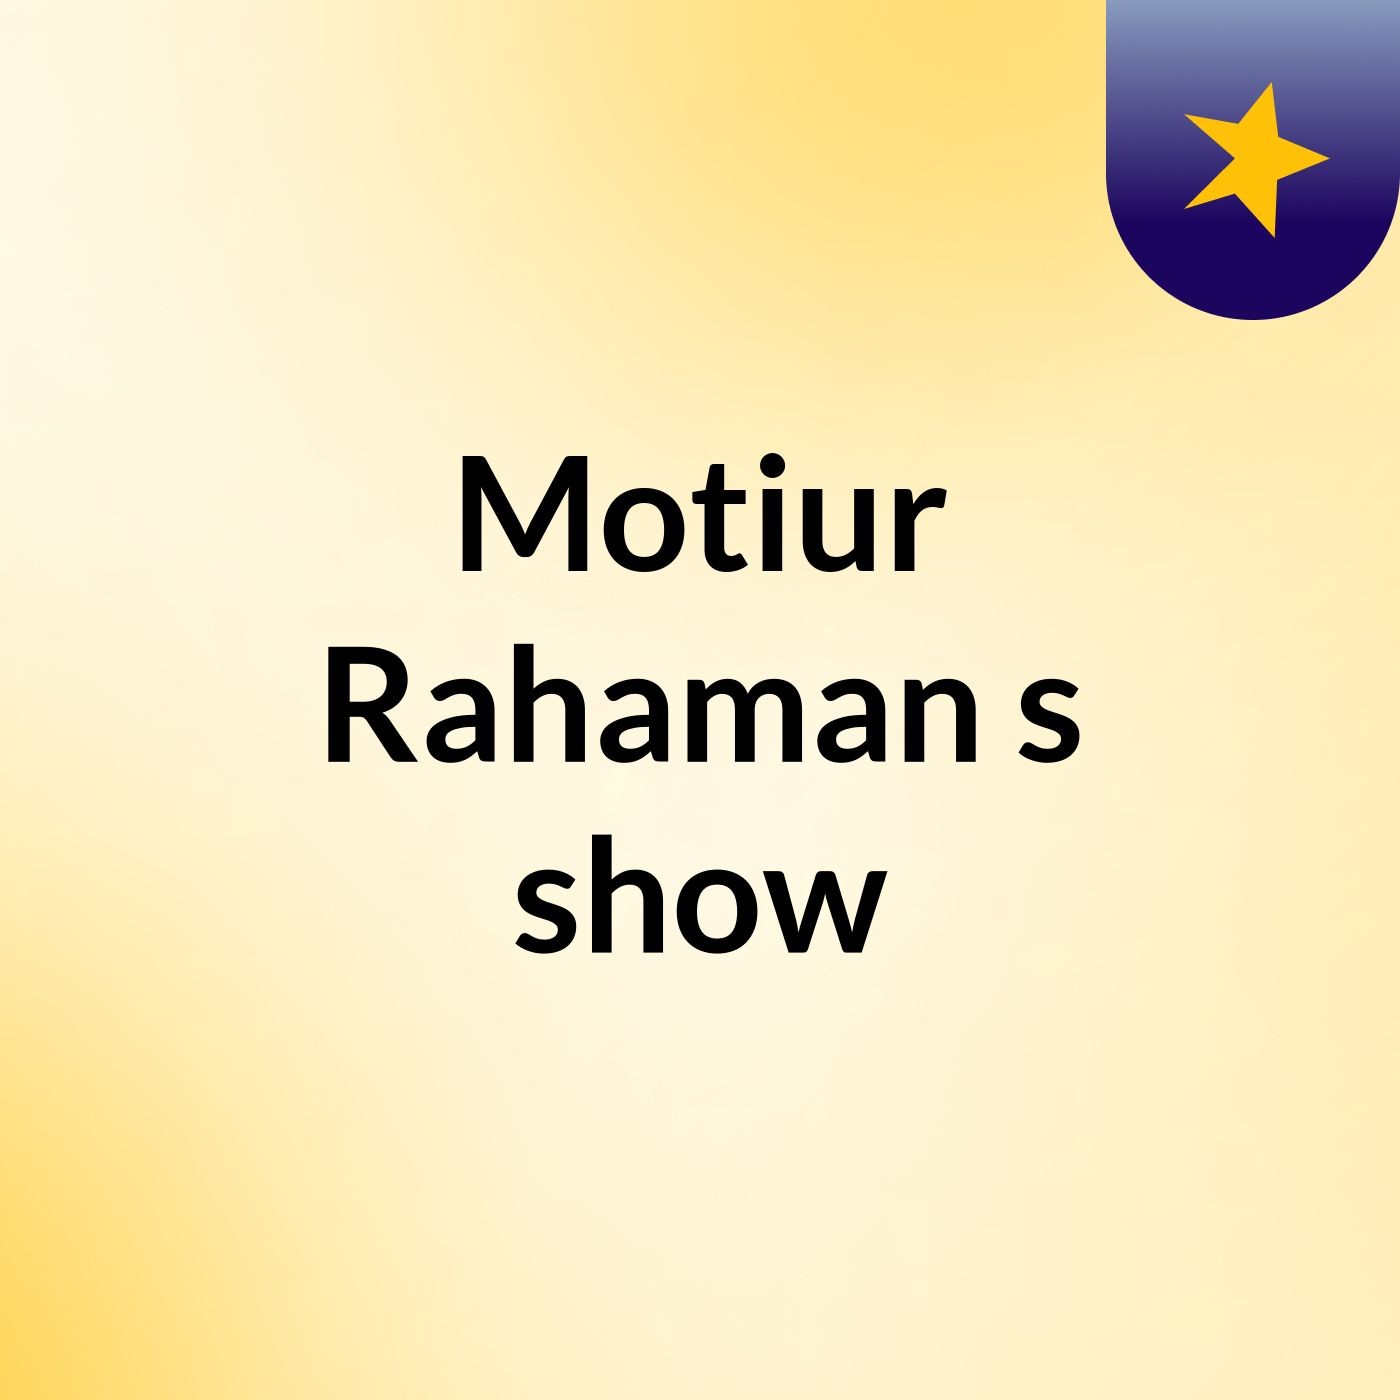 Motiur Rahaman's show